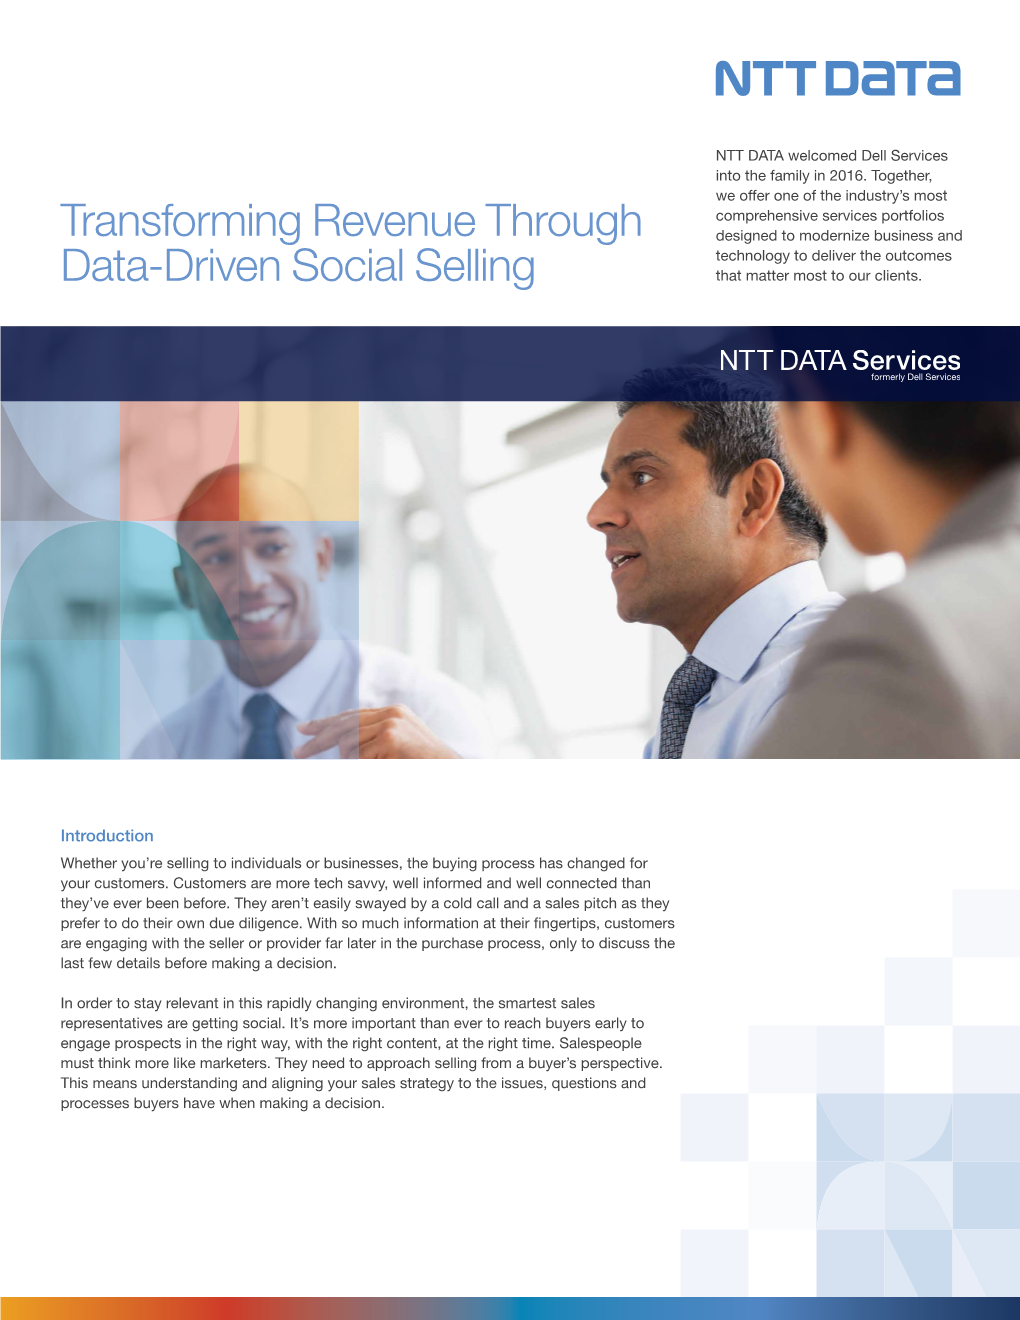 Transforming Revenue Through Data-Driven Social Selling